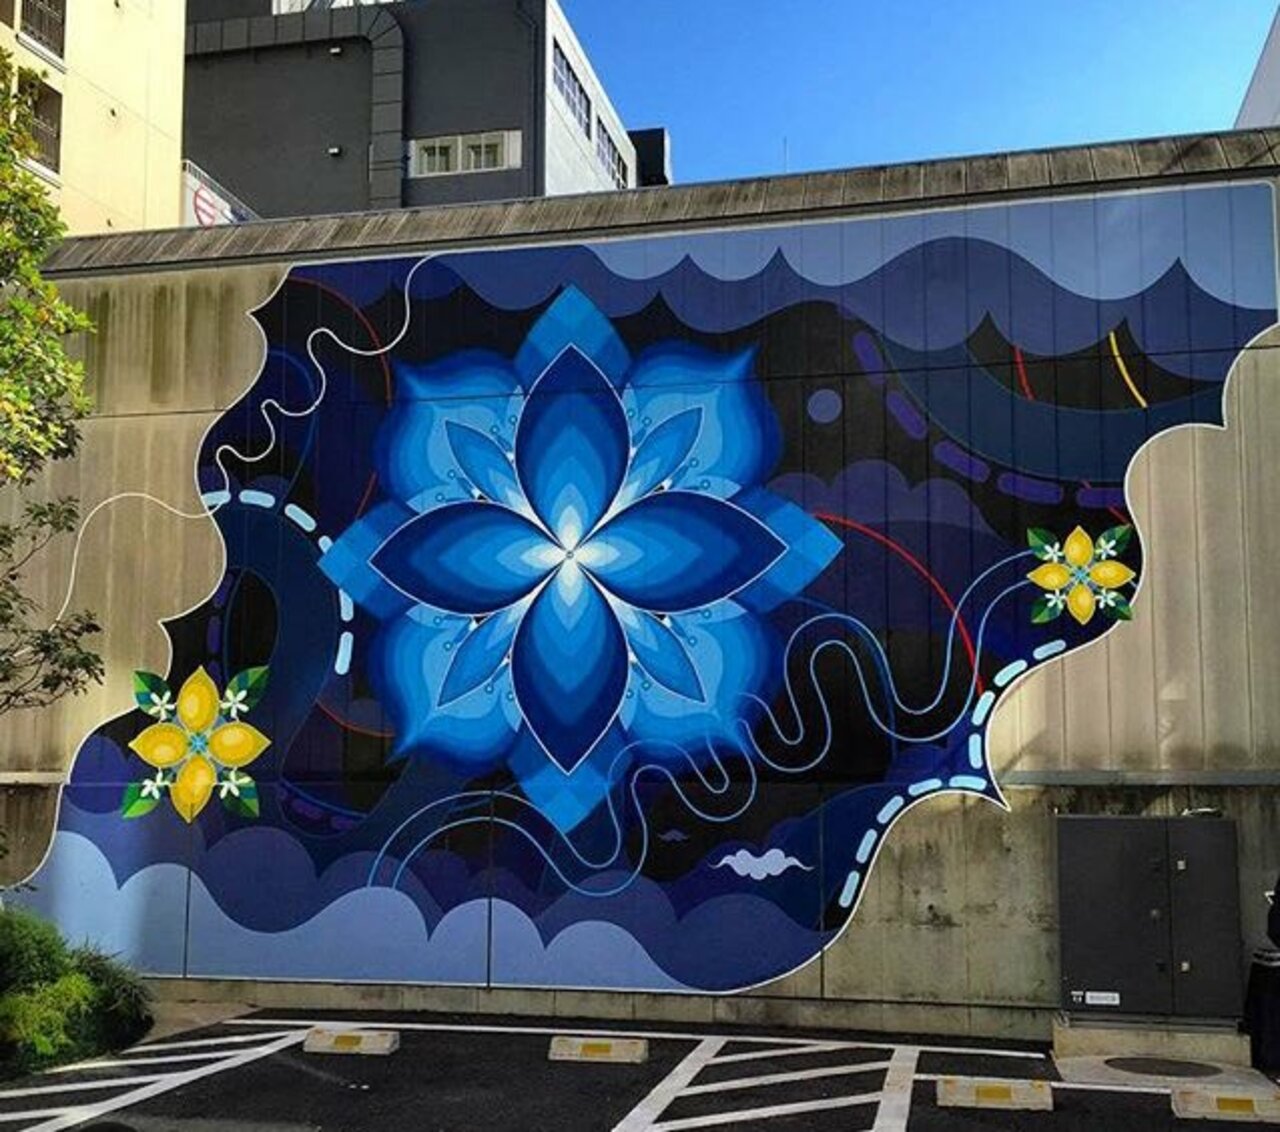 RT belilac "RT belilac "New Street Art by htzk, kami_htzk + sasu_lyri 

#art #graffiti #mural #streetart https://t.co/CbfZPRDrj3""